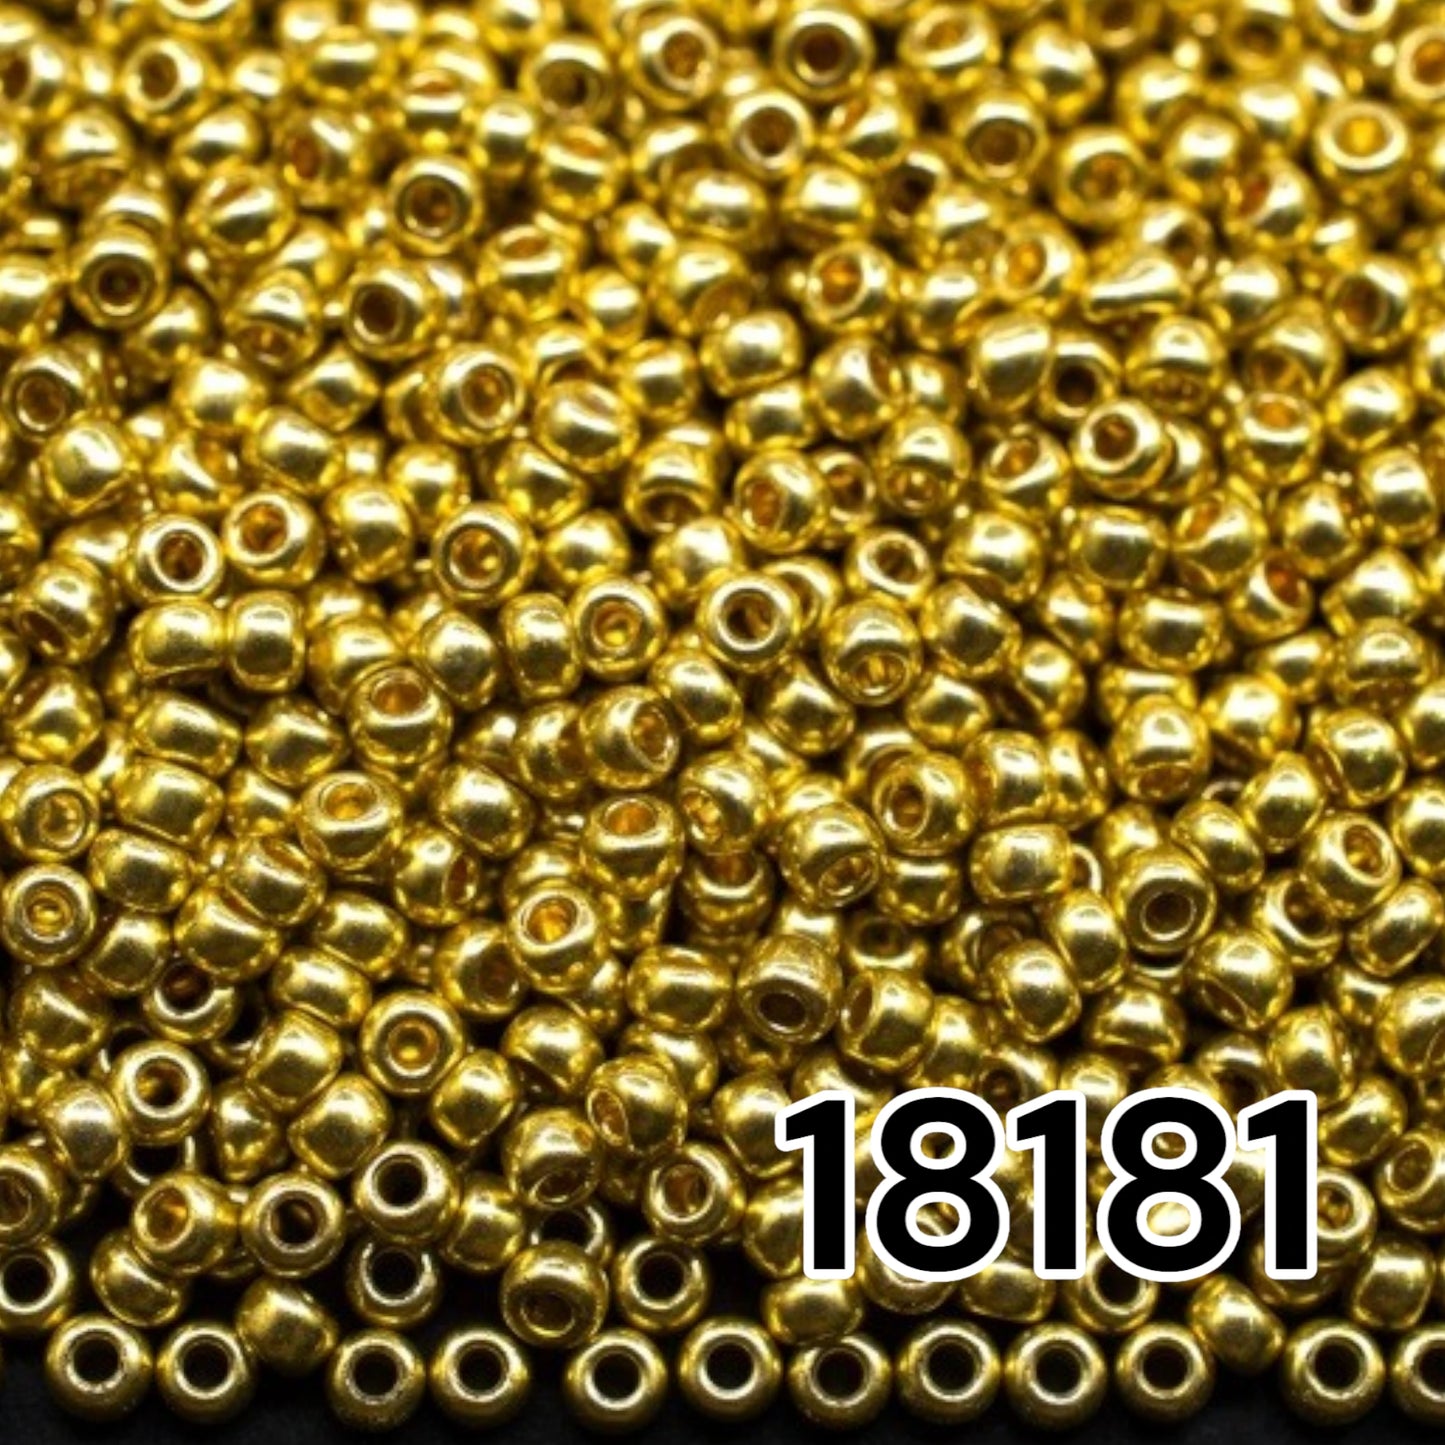 18181 Rocailles tchèques PRECIOSA rondes 10/0 Or métallisé. Métallique - Solgel.